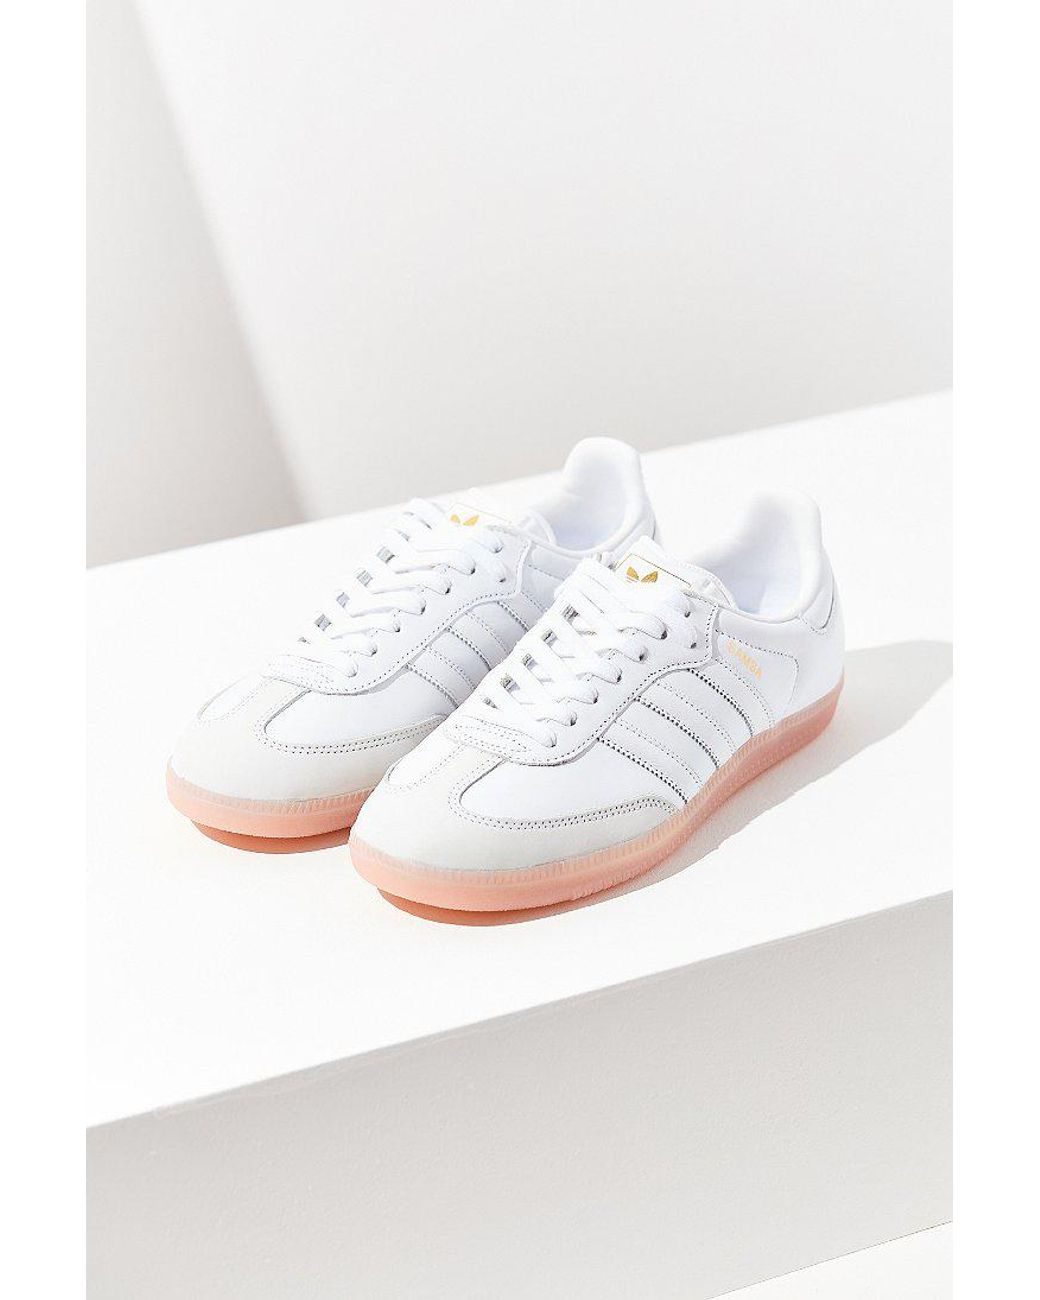 adidas Originals Leather Originals Samba Pink Sole Sneaker in White | Lyst